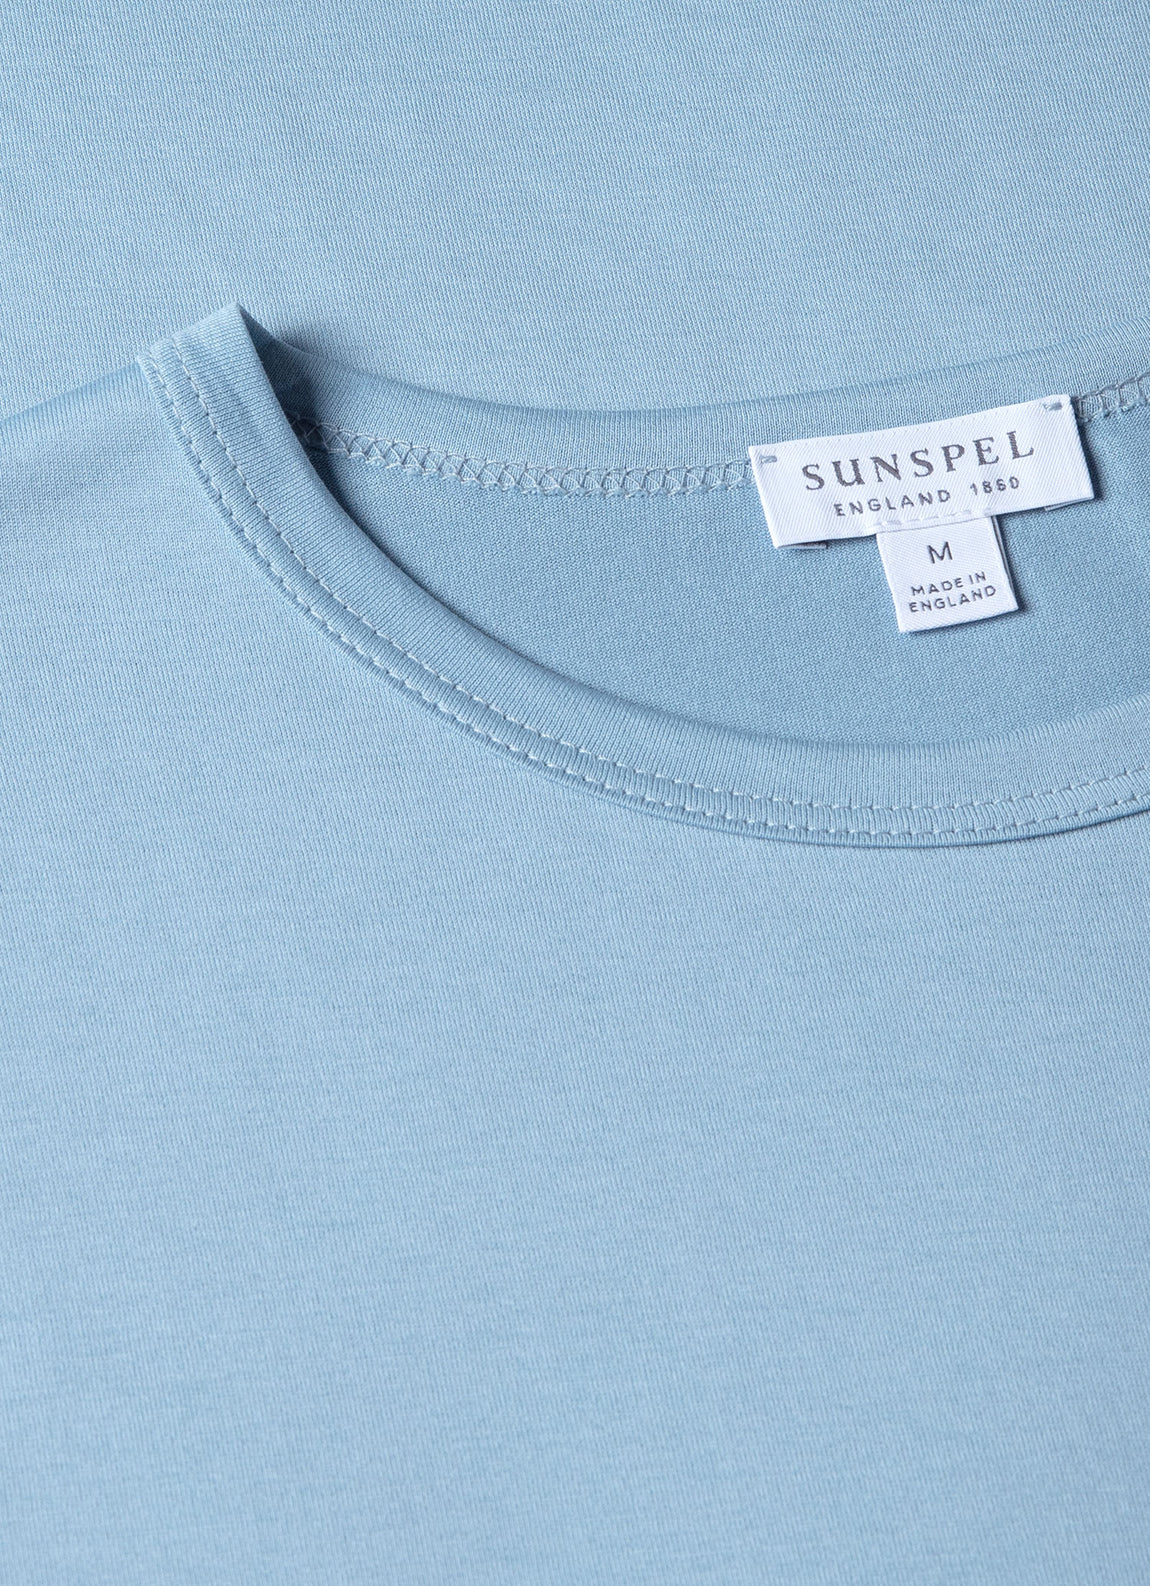 Men's Classic T-shirt in Sky Blue | Sunspel